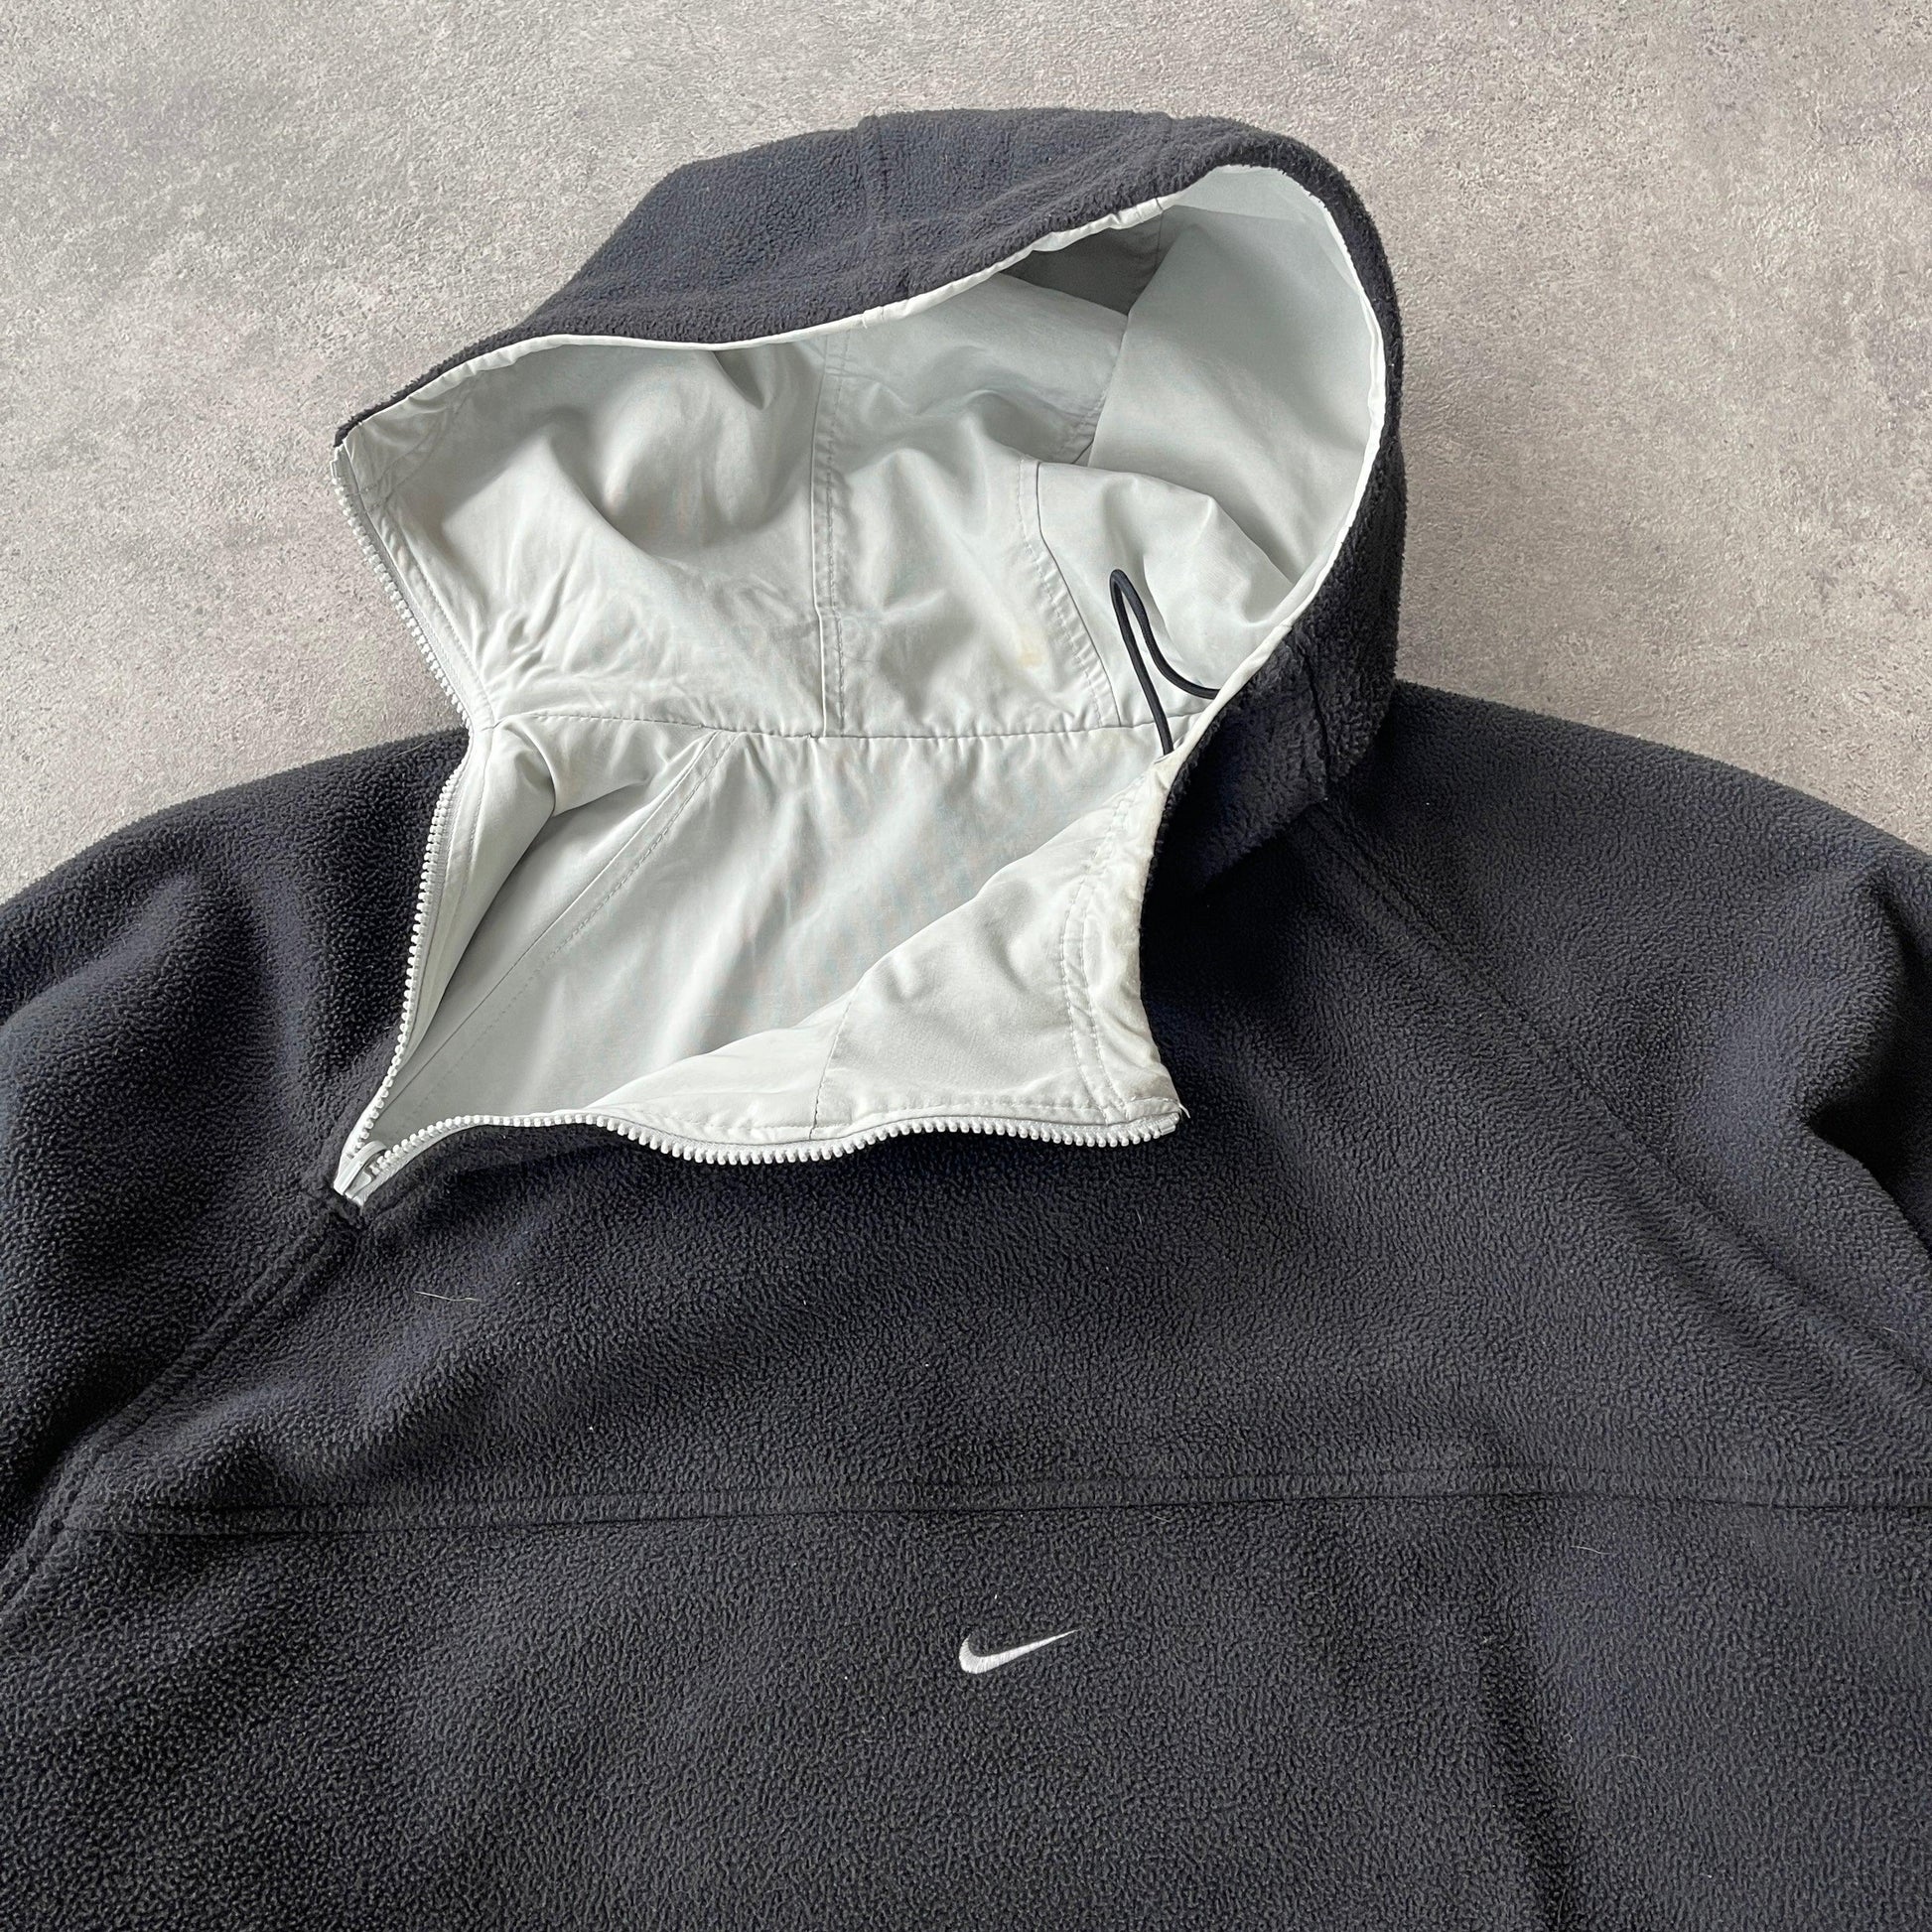 Nike RARE 2001 reversible asymmetric technical fleece pulloverjacket (L) - Known Source